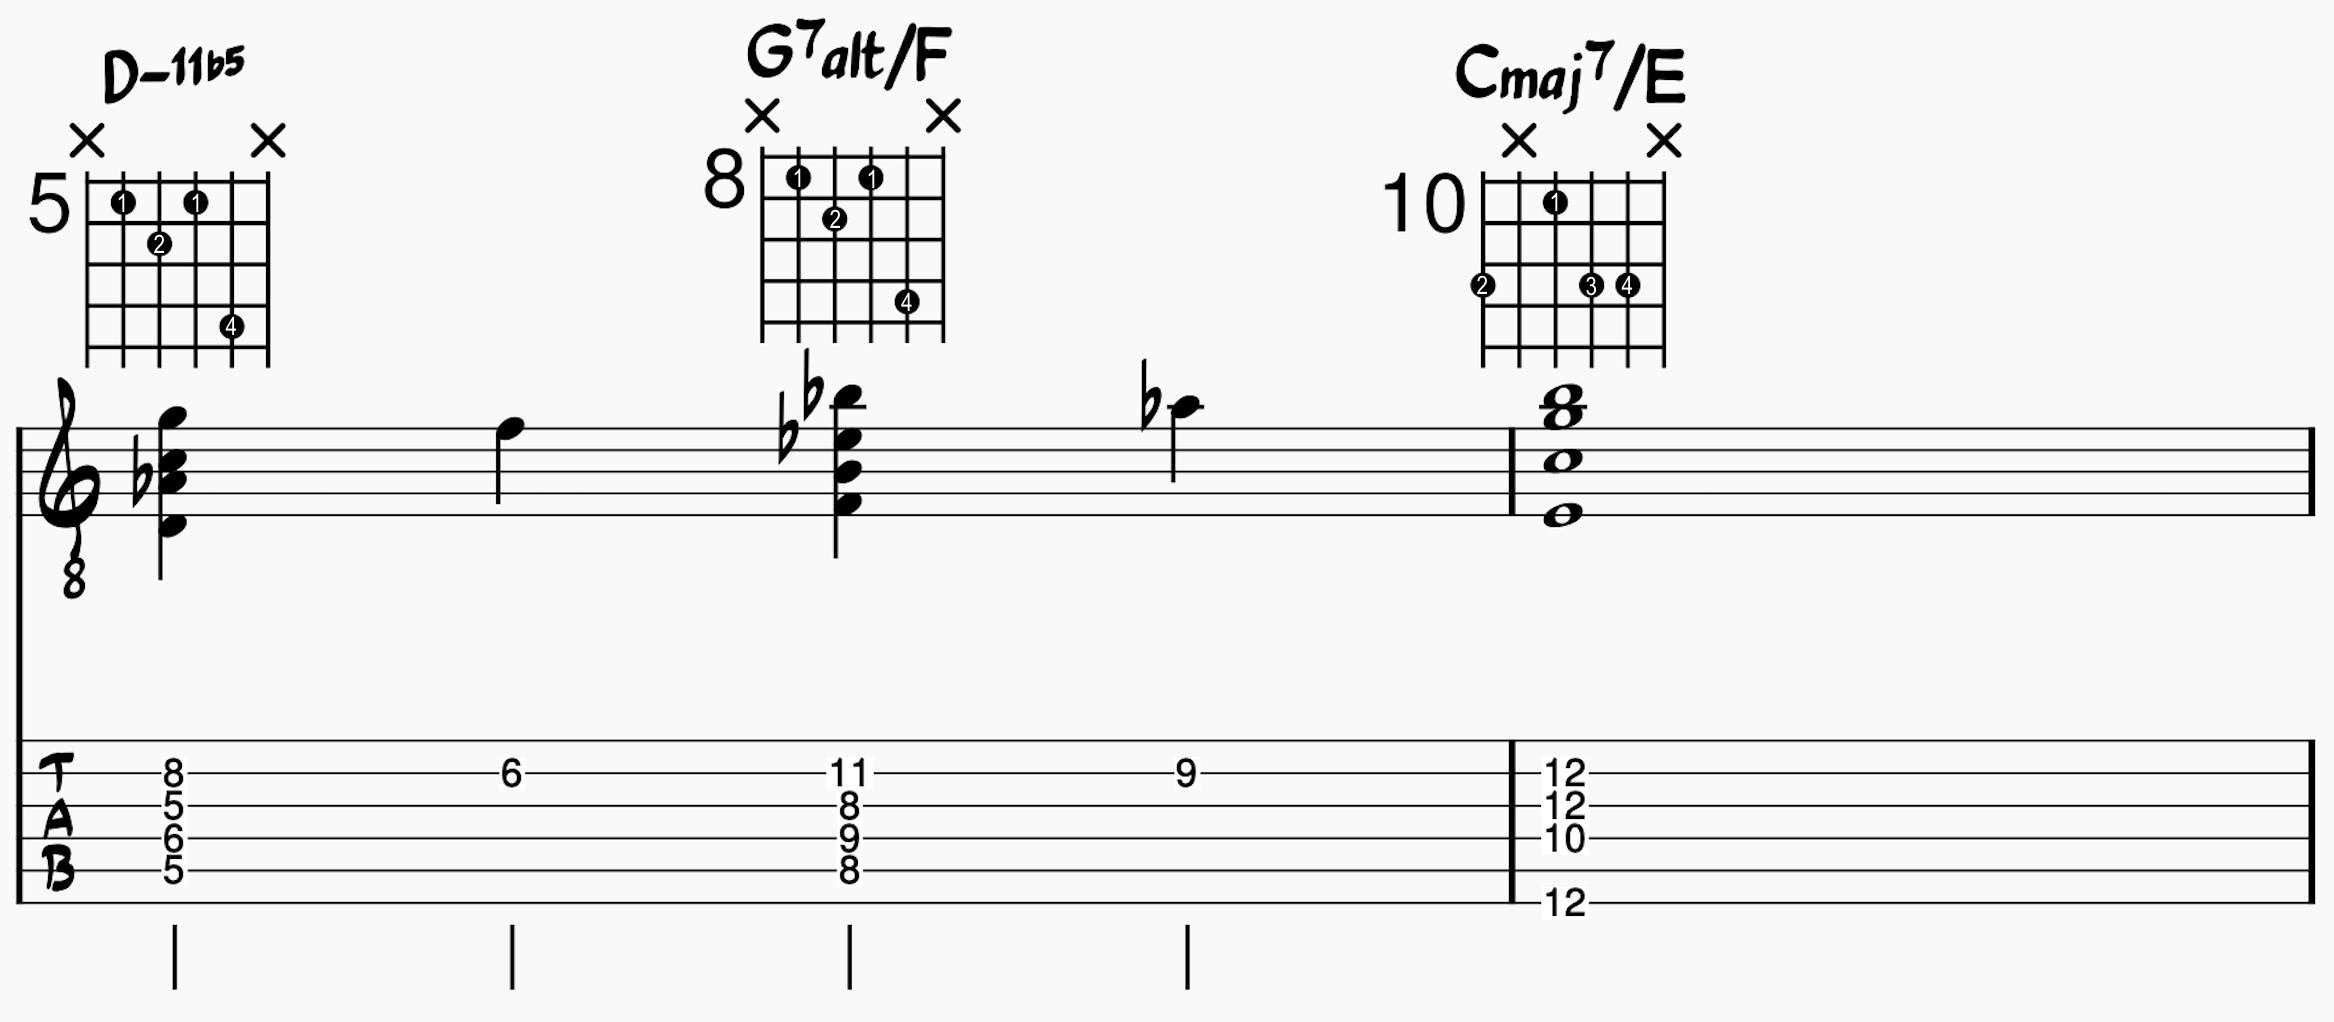 ii-V-I chord progression: D-11b5 to G7alt/F to Cmaj7/E